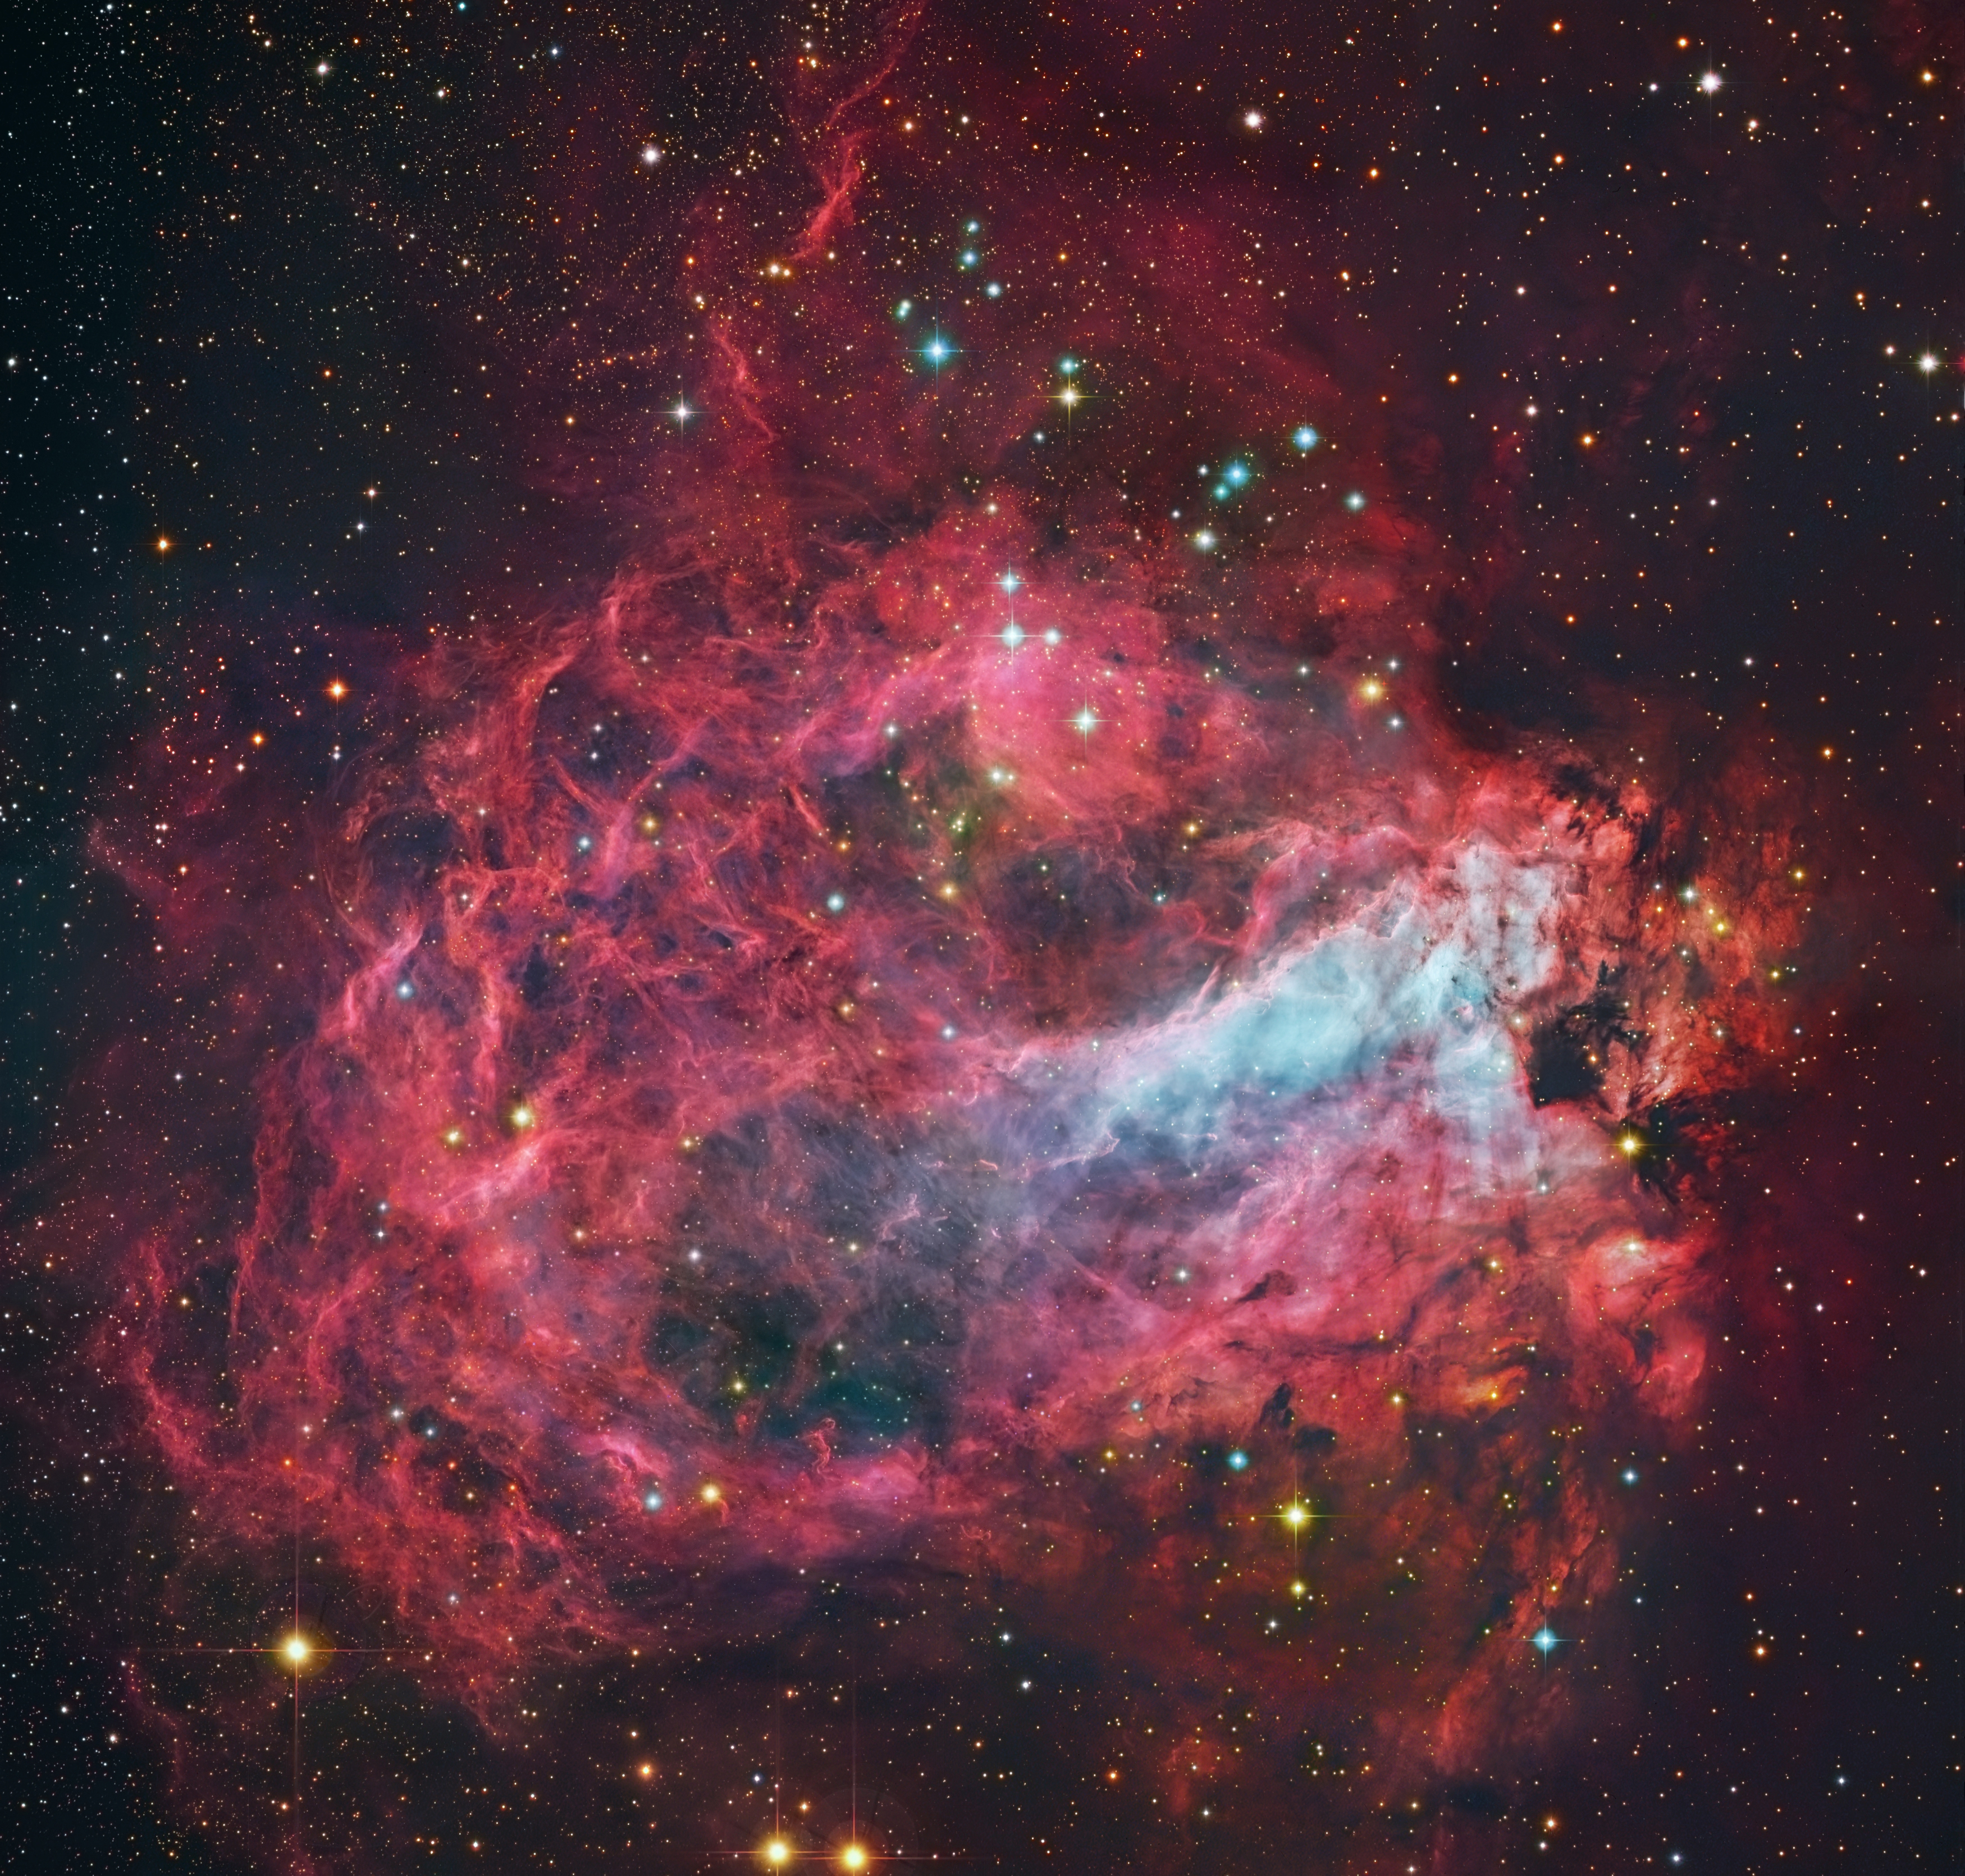 Star Factory Messier 17